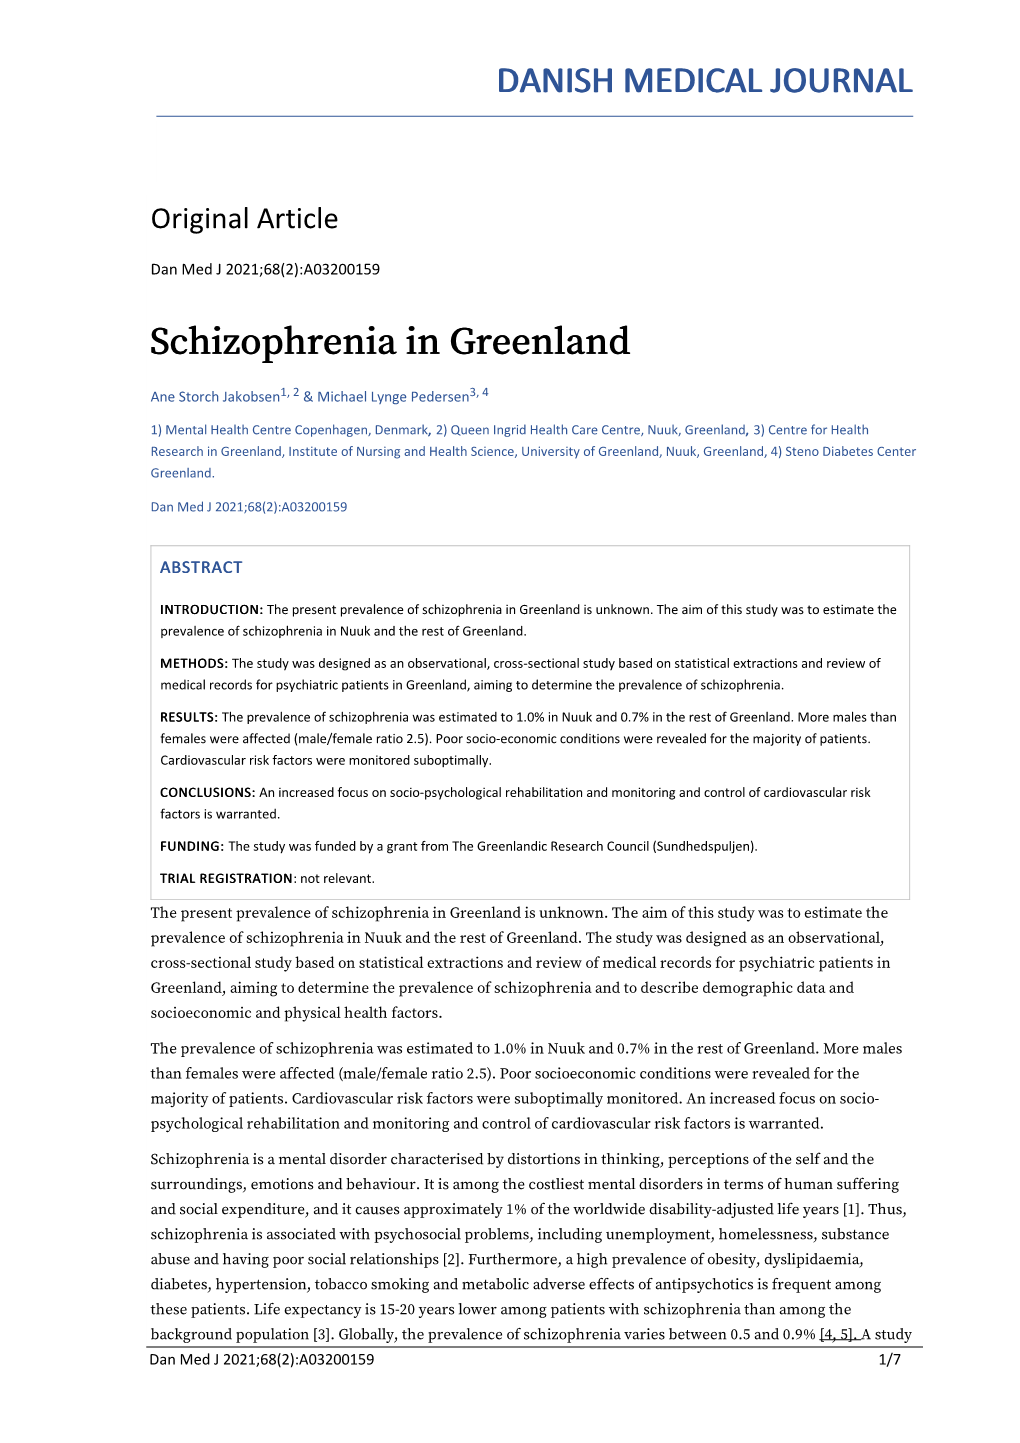 Schizophrenia in Greenland